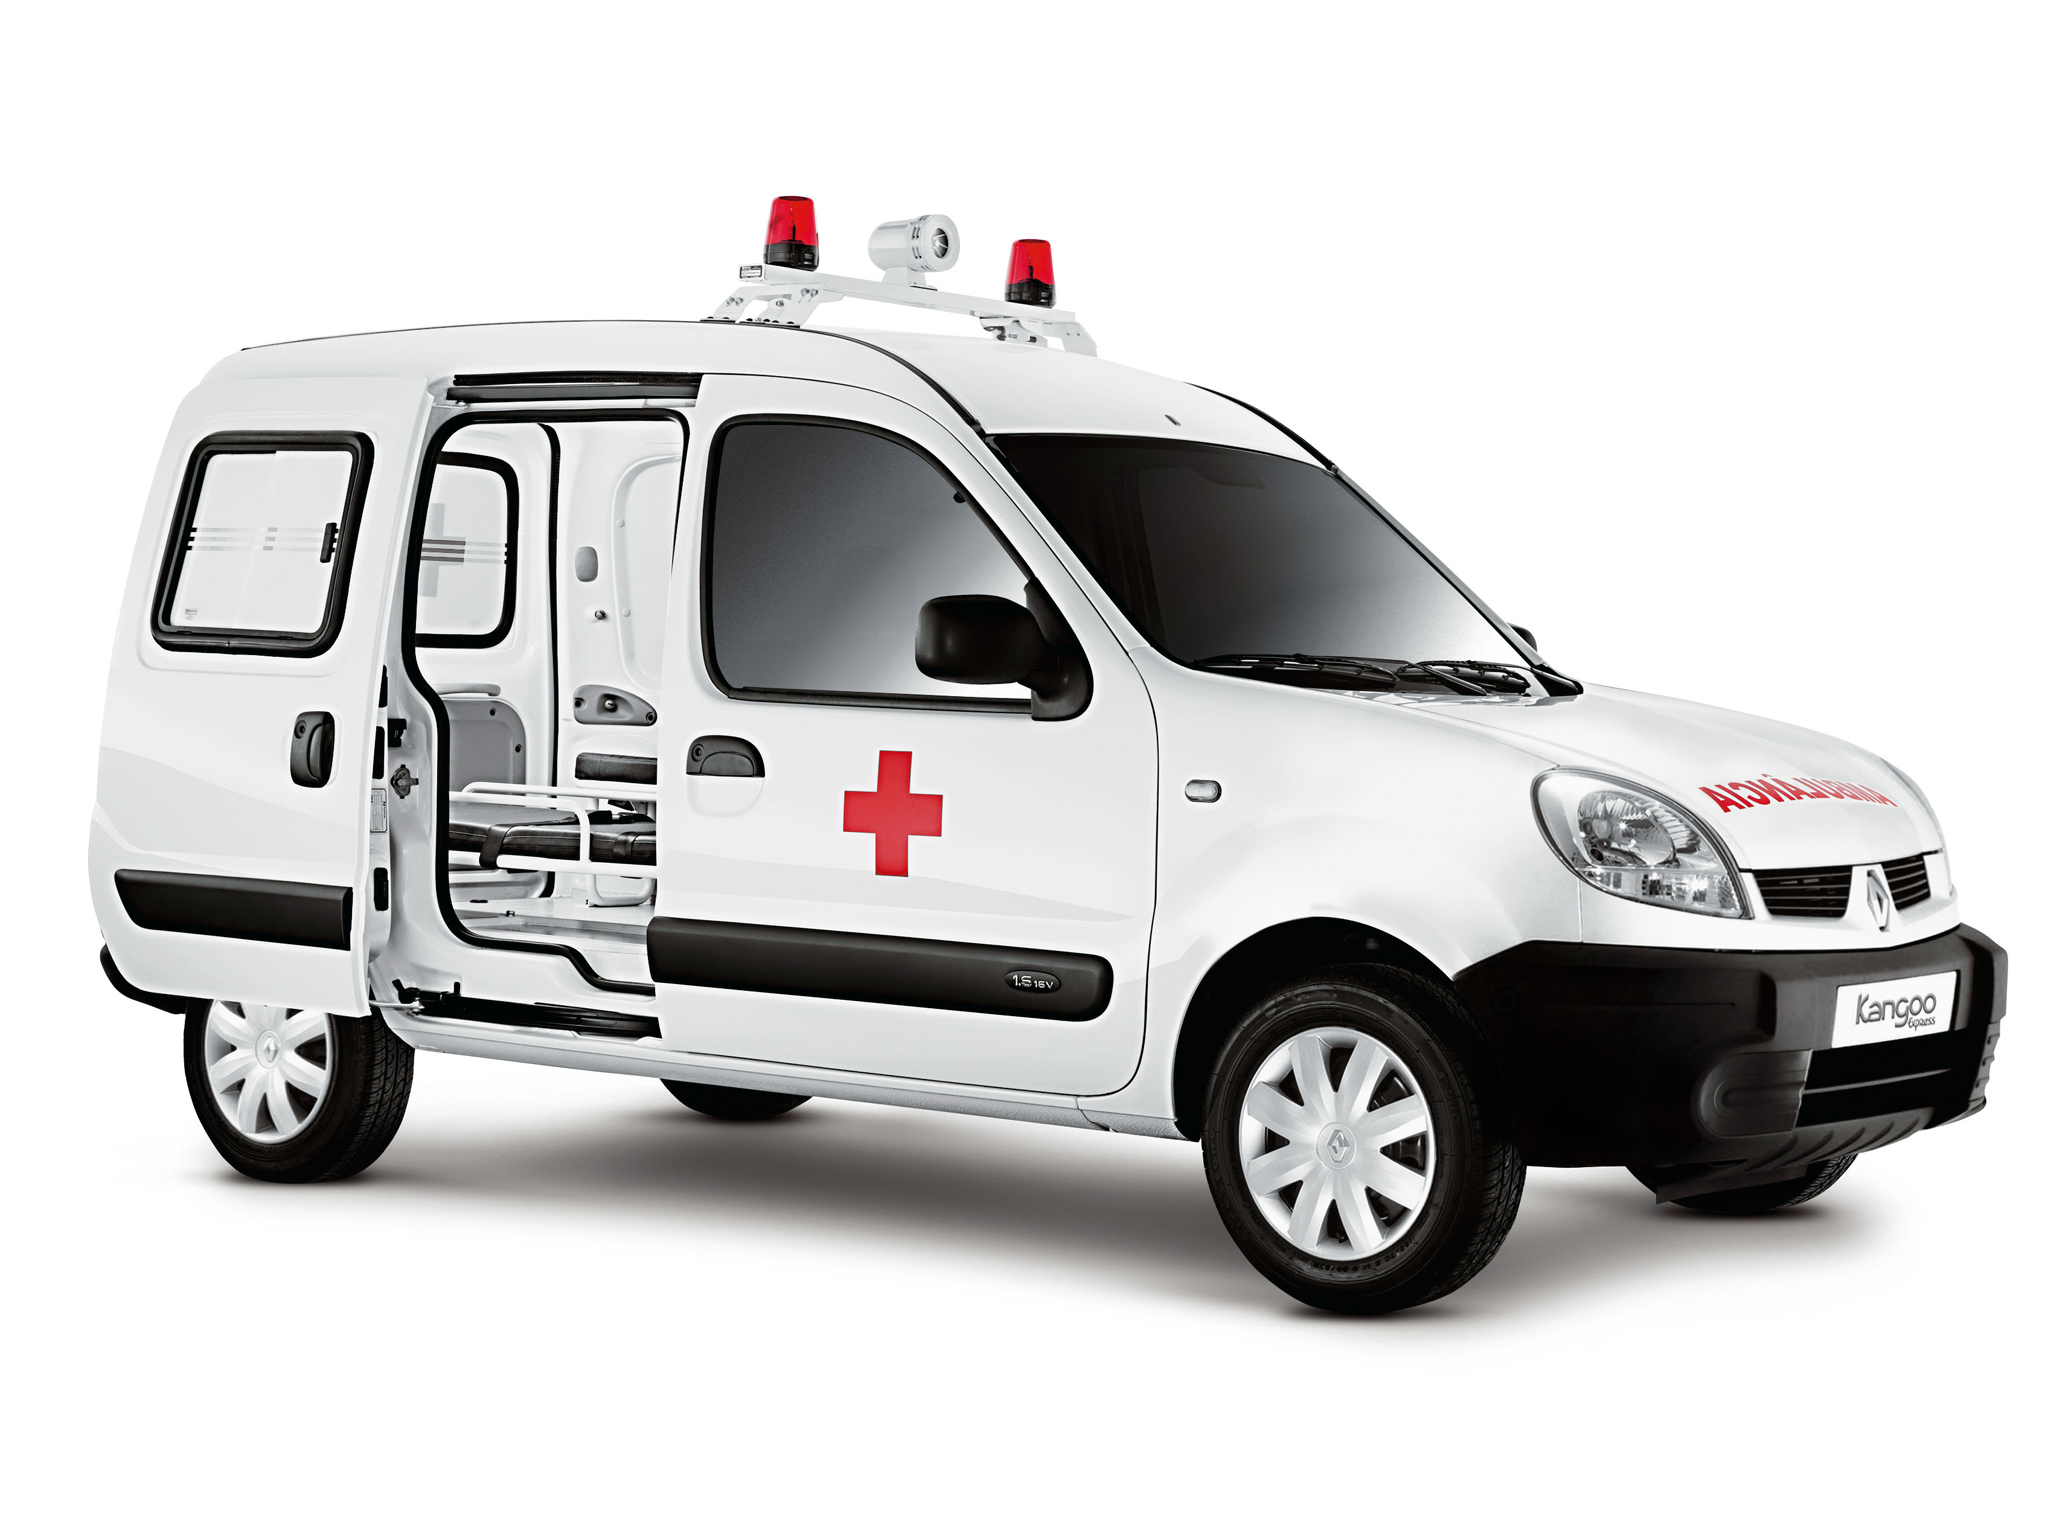 2008, Renault, Kangoo, Express, Ambulancia, Br spec, Ambulance, Emergency Wallpaper